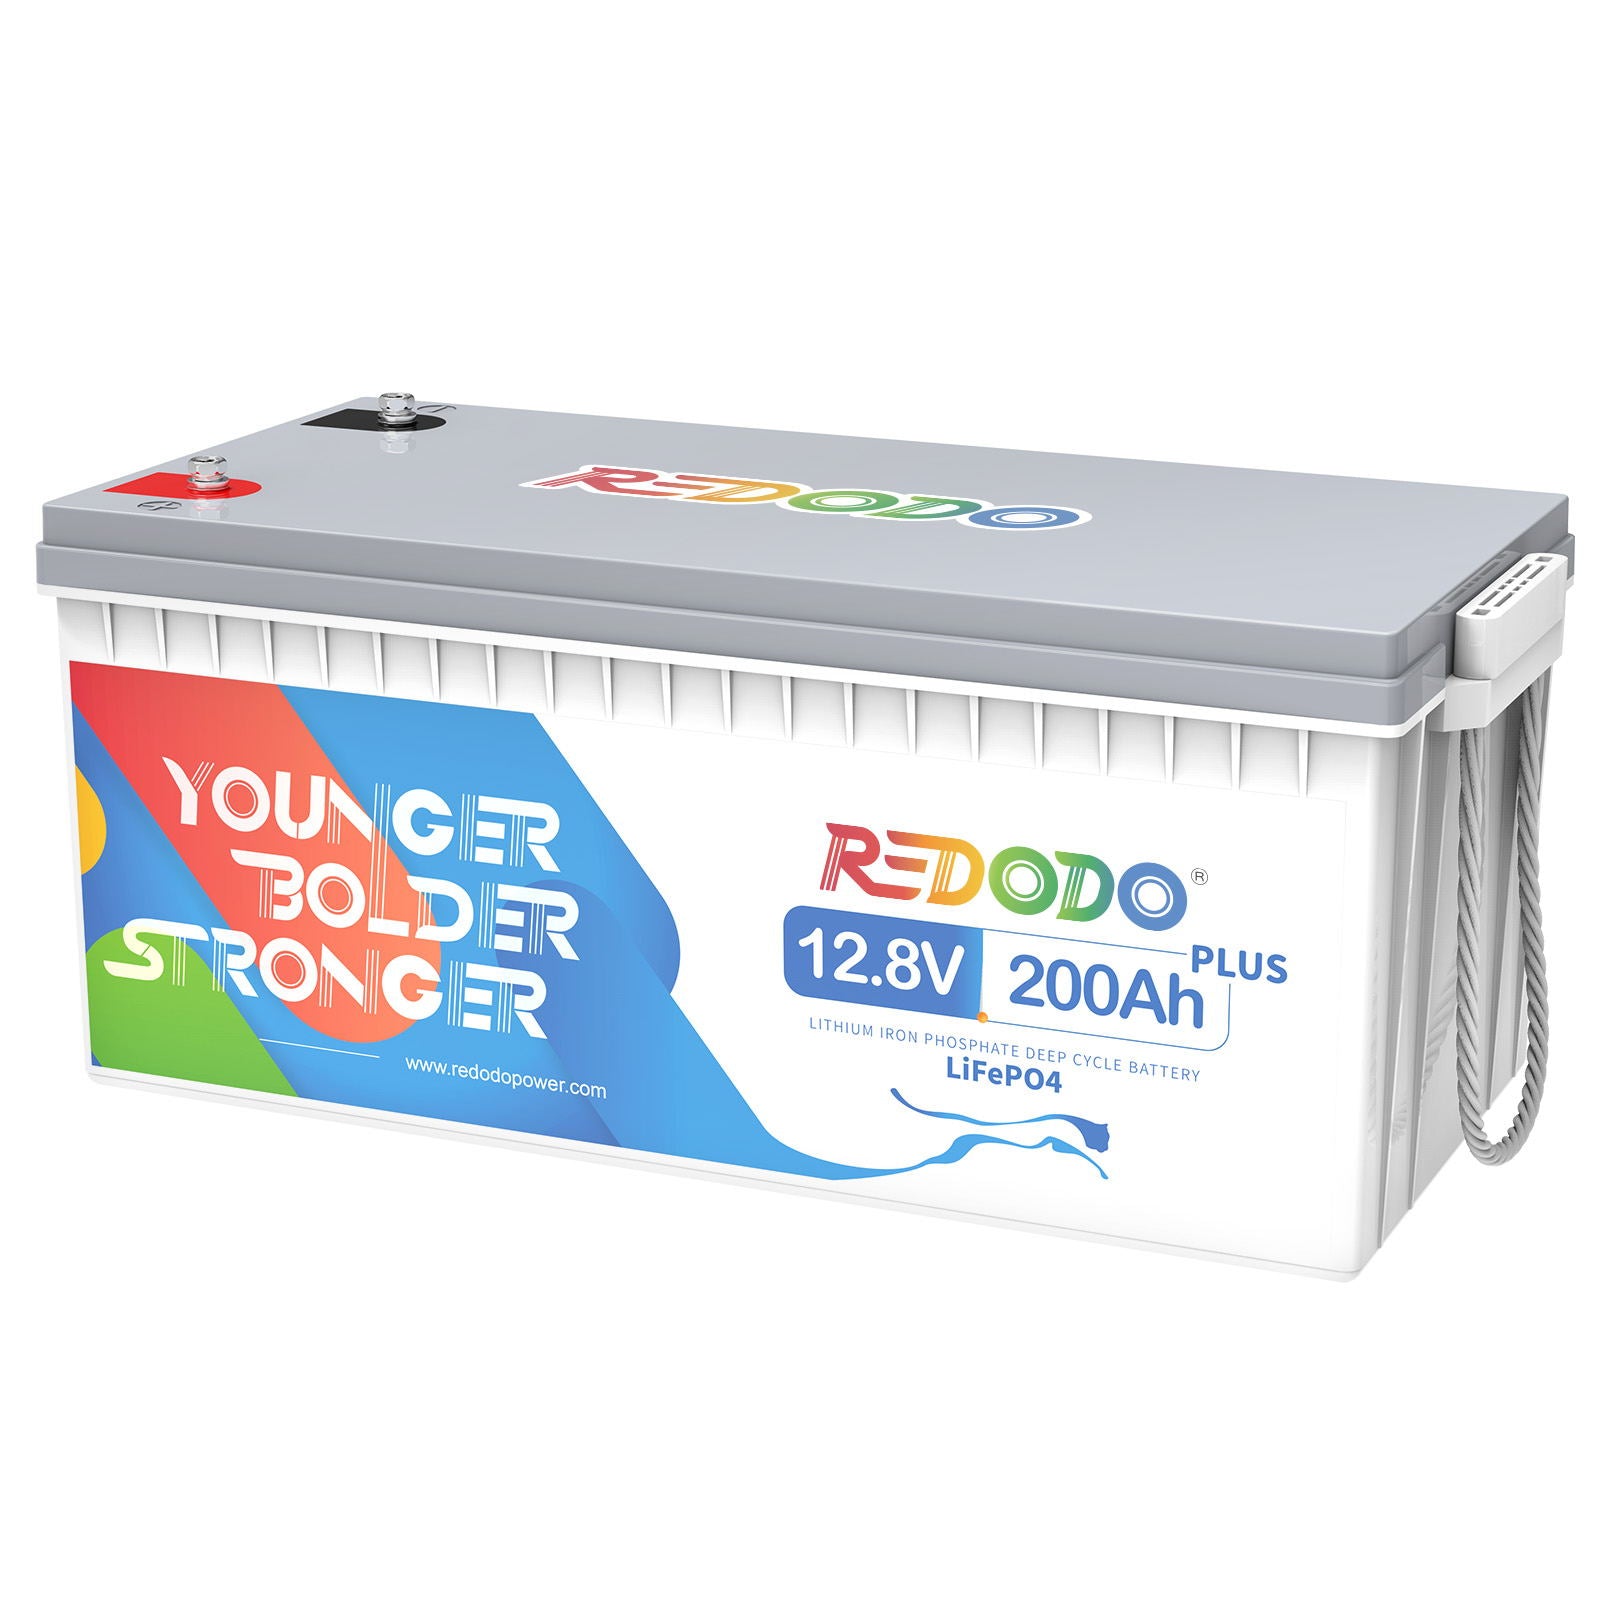 Redodo Power 12V 200Ah Plus LiFePO4 Batterie, über 4000-15000+